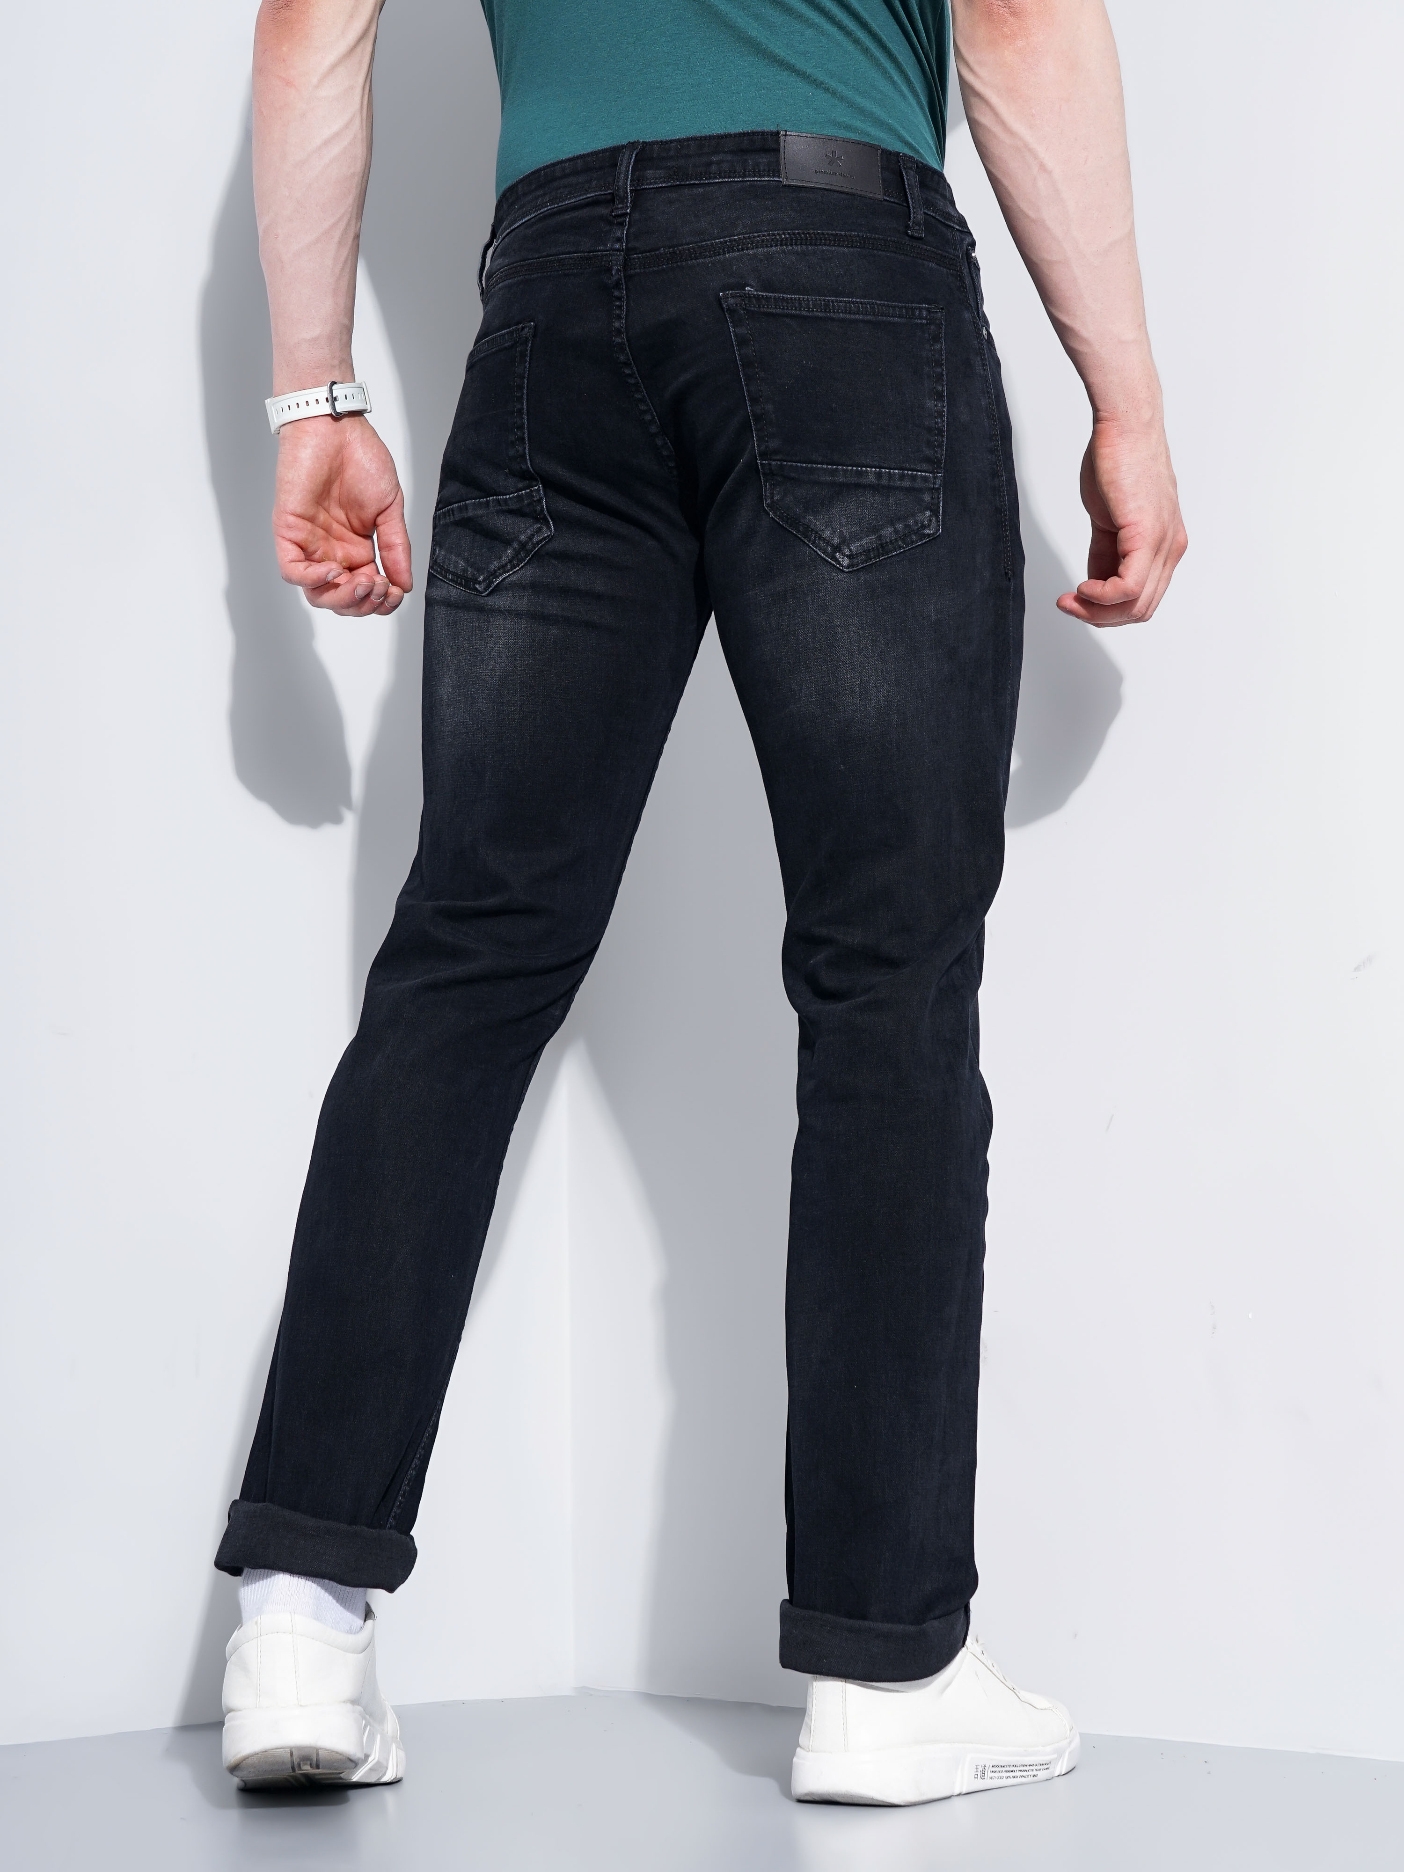 Kala Kendra - Black Denim Jeans For Women